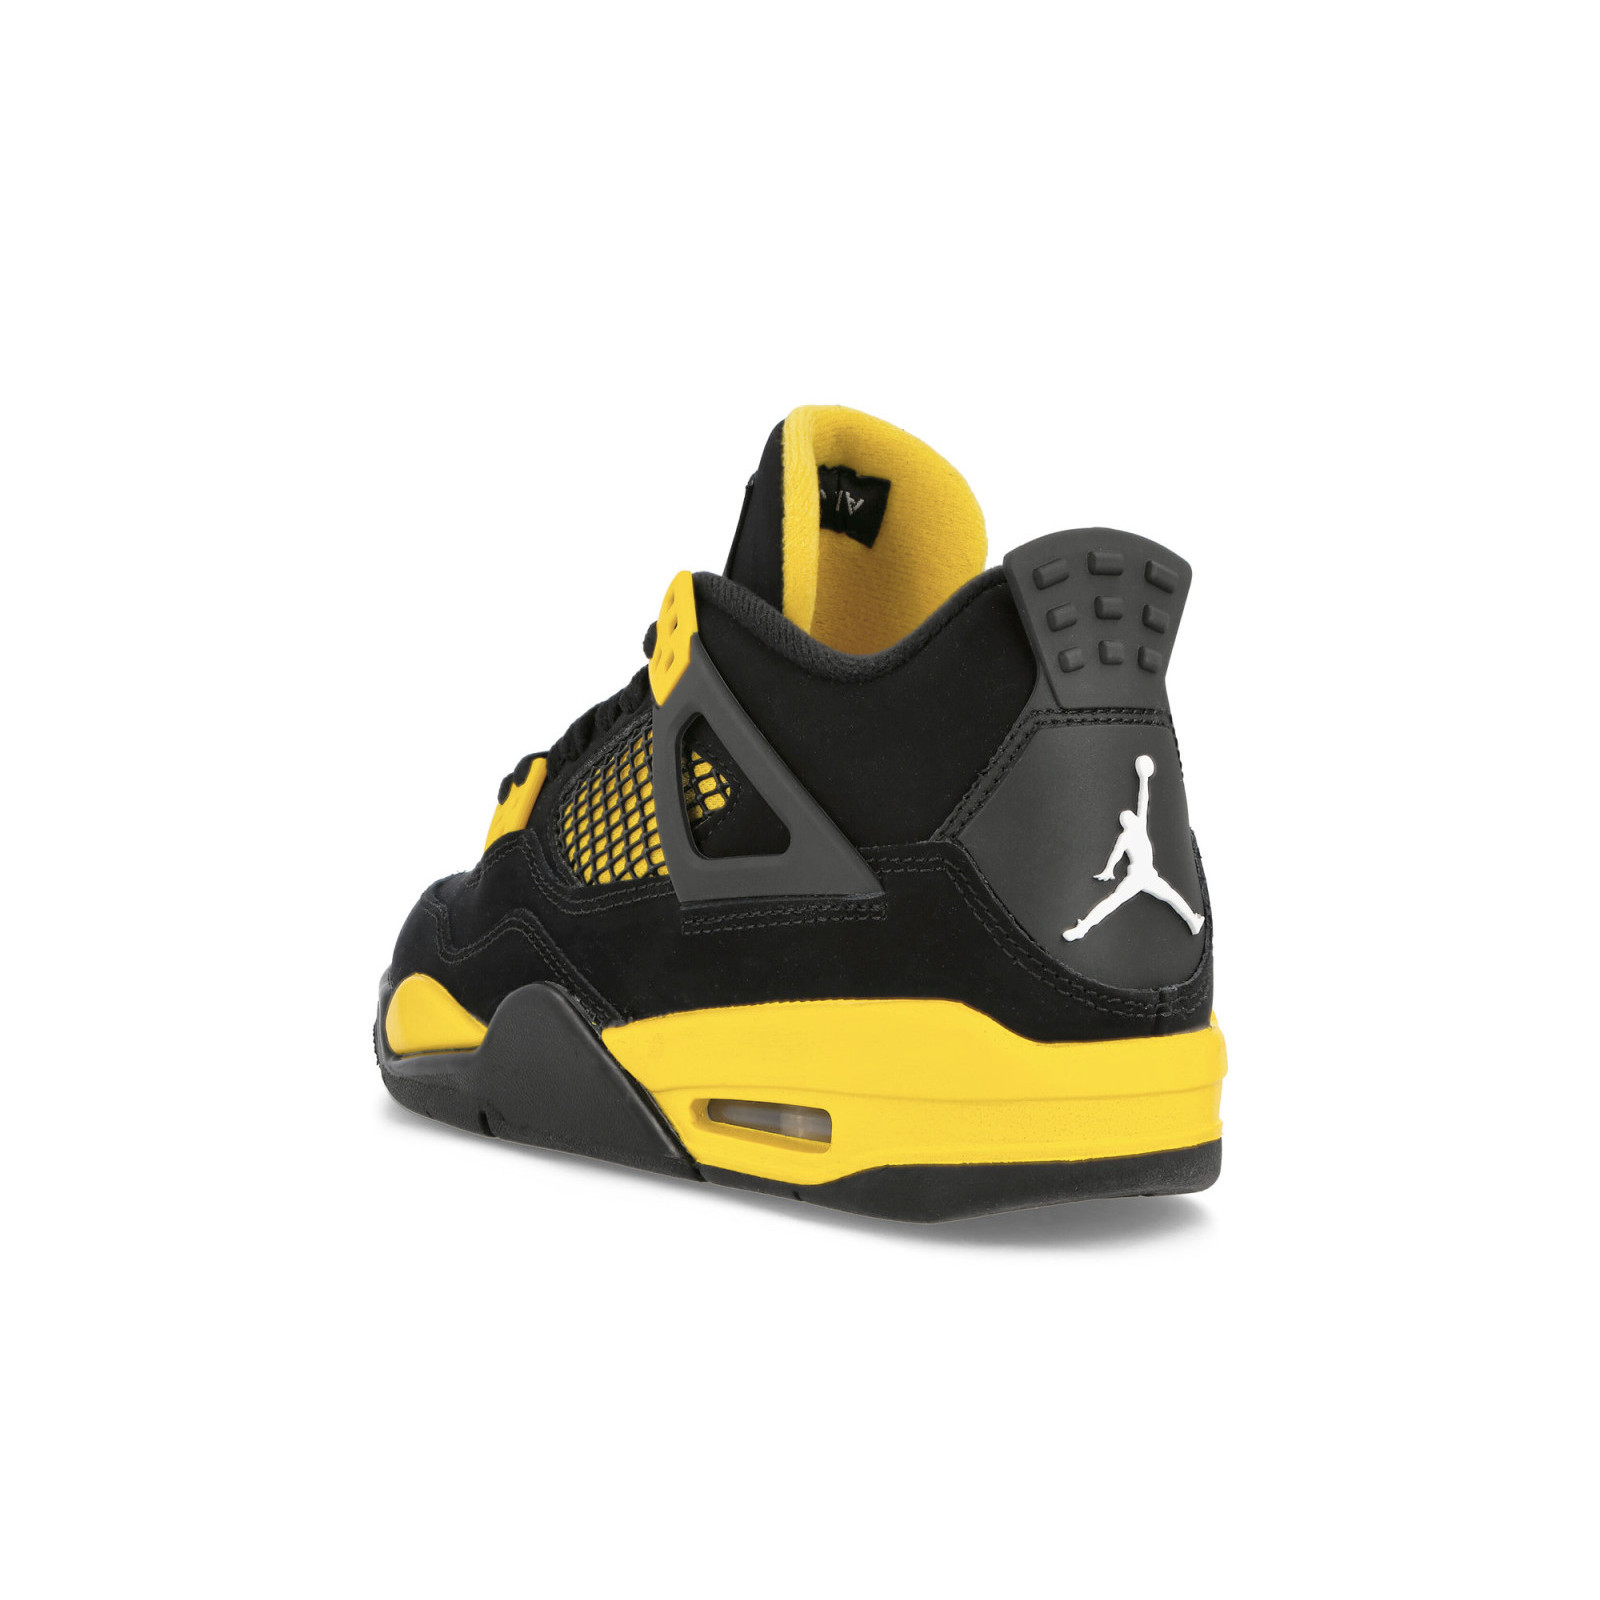 Air Jordan 4 Retro
« Tour Yellow »